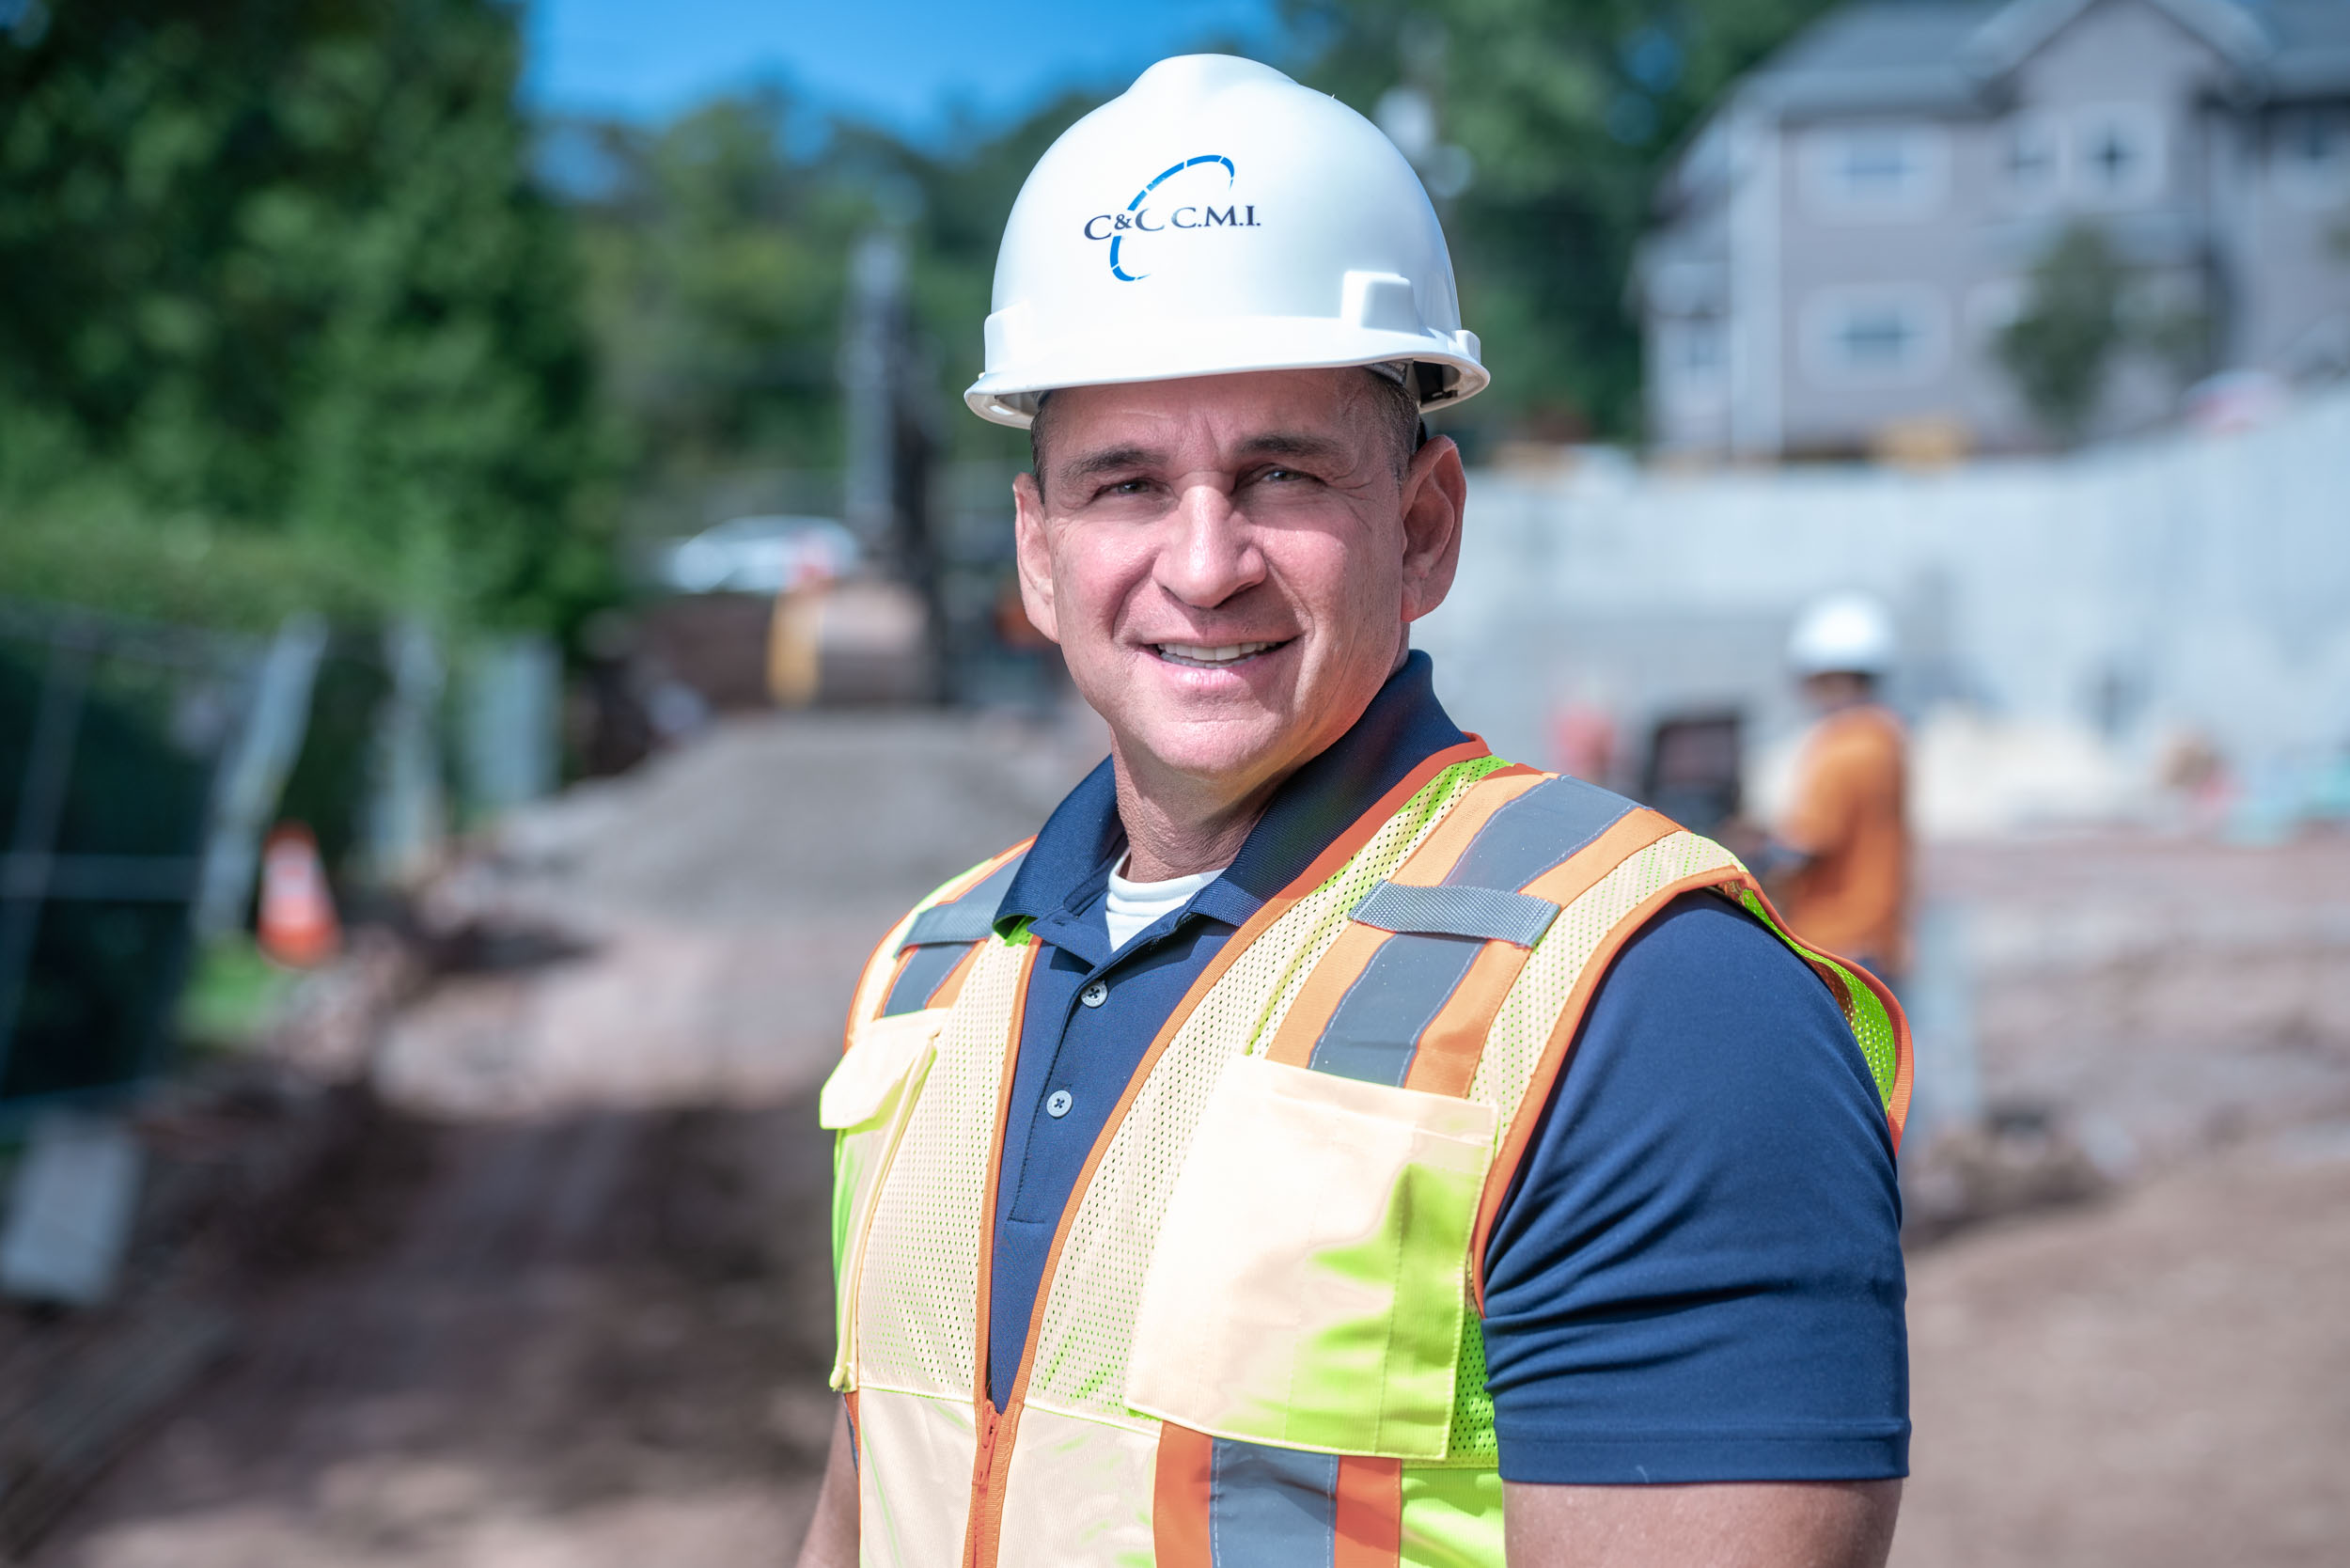 Sean Crowley of C & C Construction Management in Philadelphia